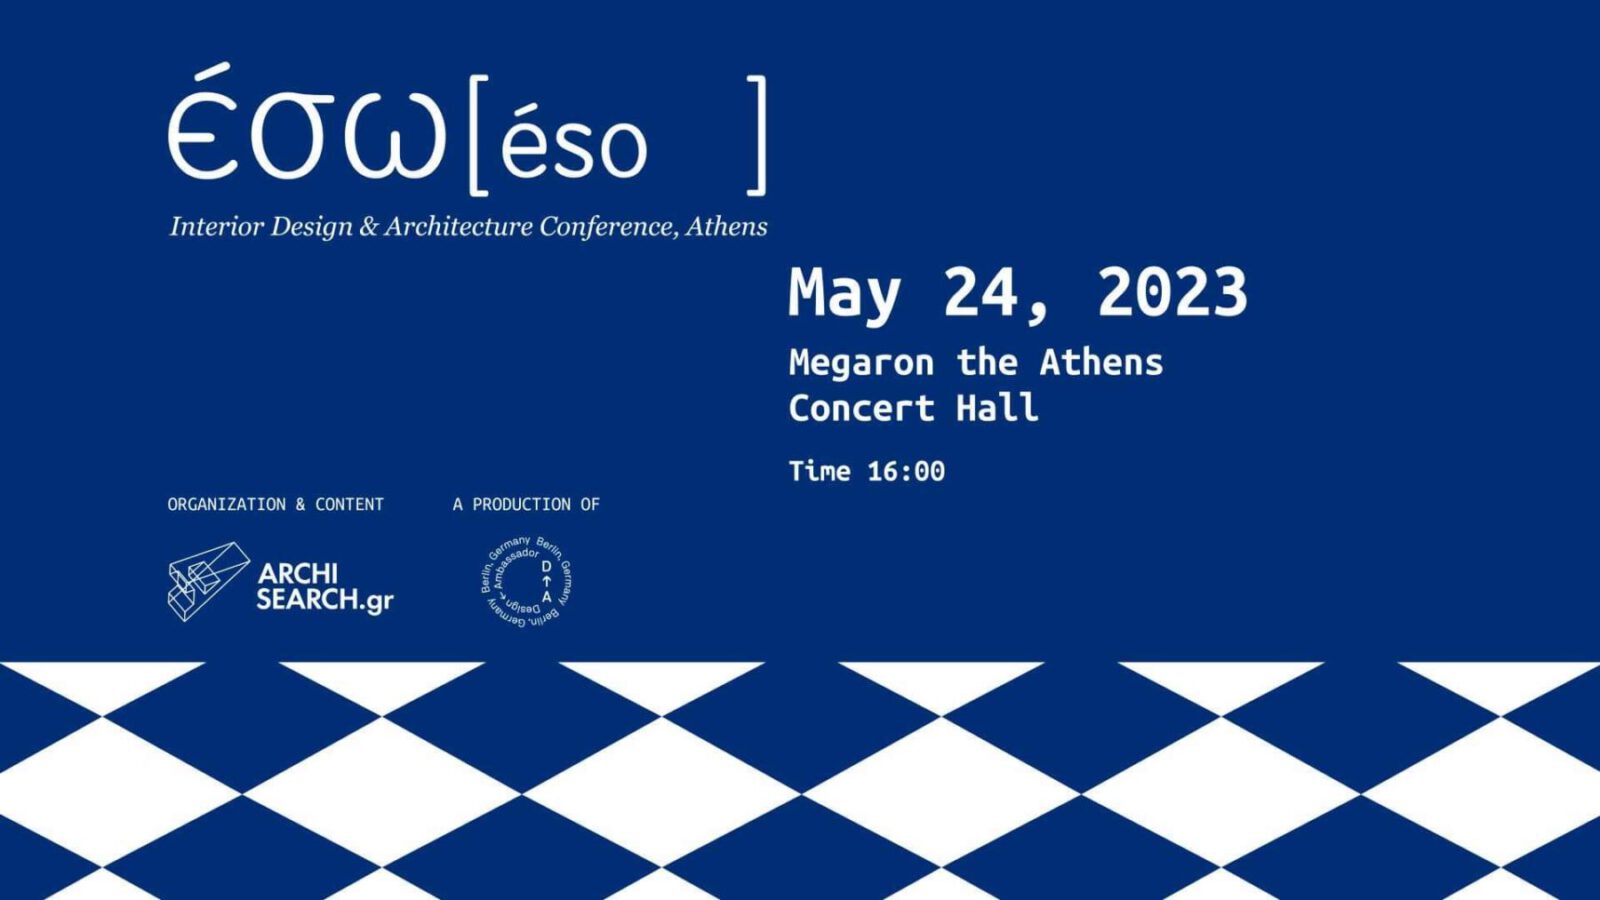 Archisearch ΕΣΩ 2023 // MULTIVERSE: η 11η διοργάνωση της μεγαλύτερης γιορτής για την αρχιτεκτονική και το design έρχεται στις 24 Μαΐου στην Αίθουσα Τριάντη του Μεγάρου Μουσικής Αθηνών